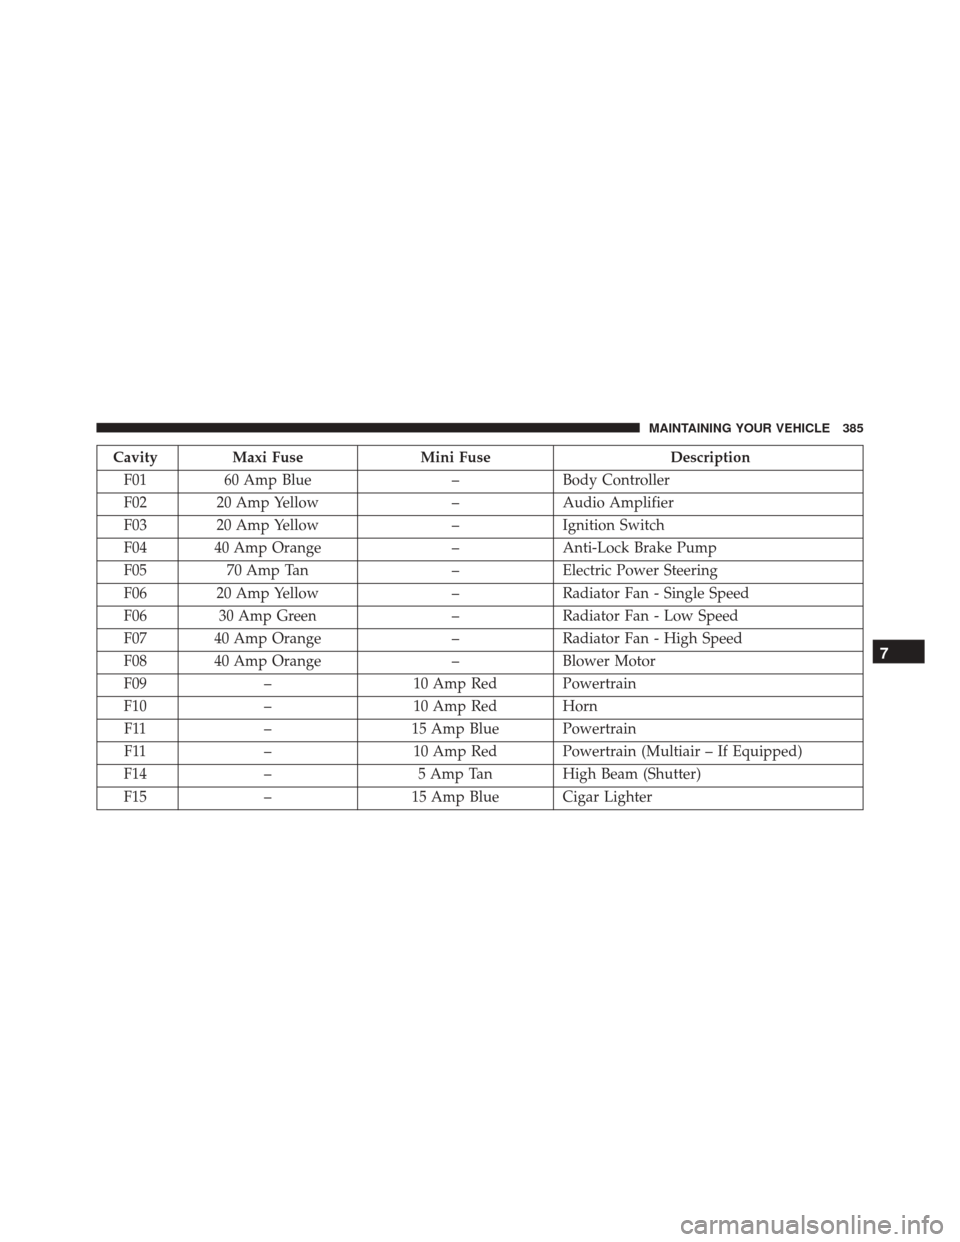 FIAT 500 ABARTH 2016 2.G Owners Manual CavityMaxi Fuse Mini Fuse Description
F01 60 Amp Blue –Body Controller
F02 20 Amp Yellow –Audio Amplifier
F03 20 Amp Yellow –Ignition Switch
F04 40 Amp Orange –Anti-Lock Brake Pump
F05 70 Amp 